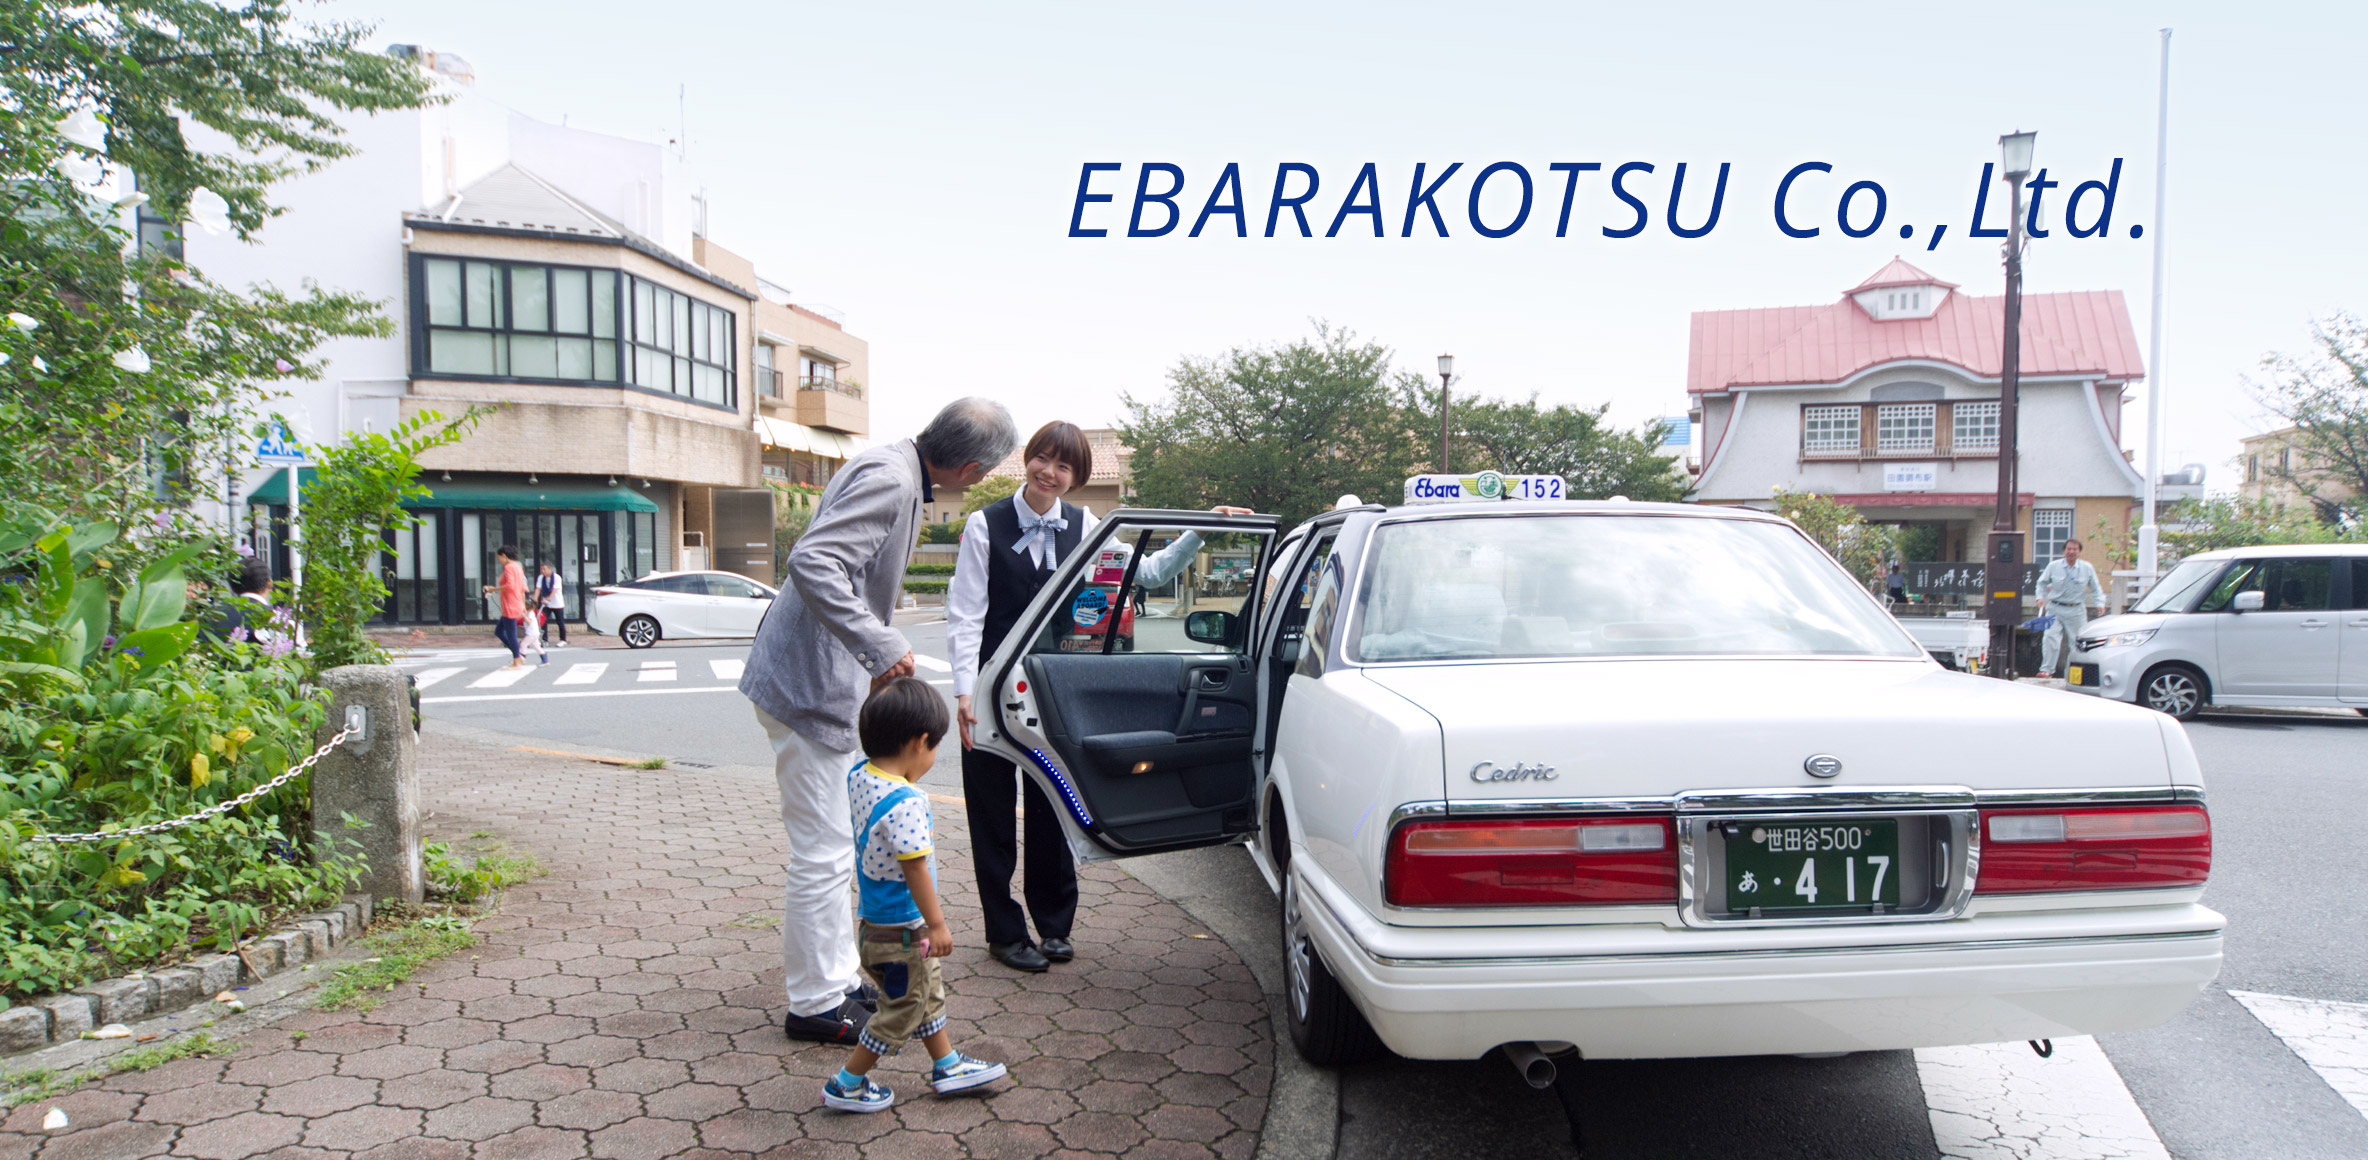 EBARAKOTSU Co.,Ltd. / Tokyo-Taxi Limousine Service